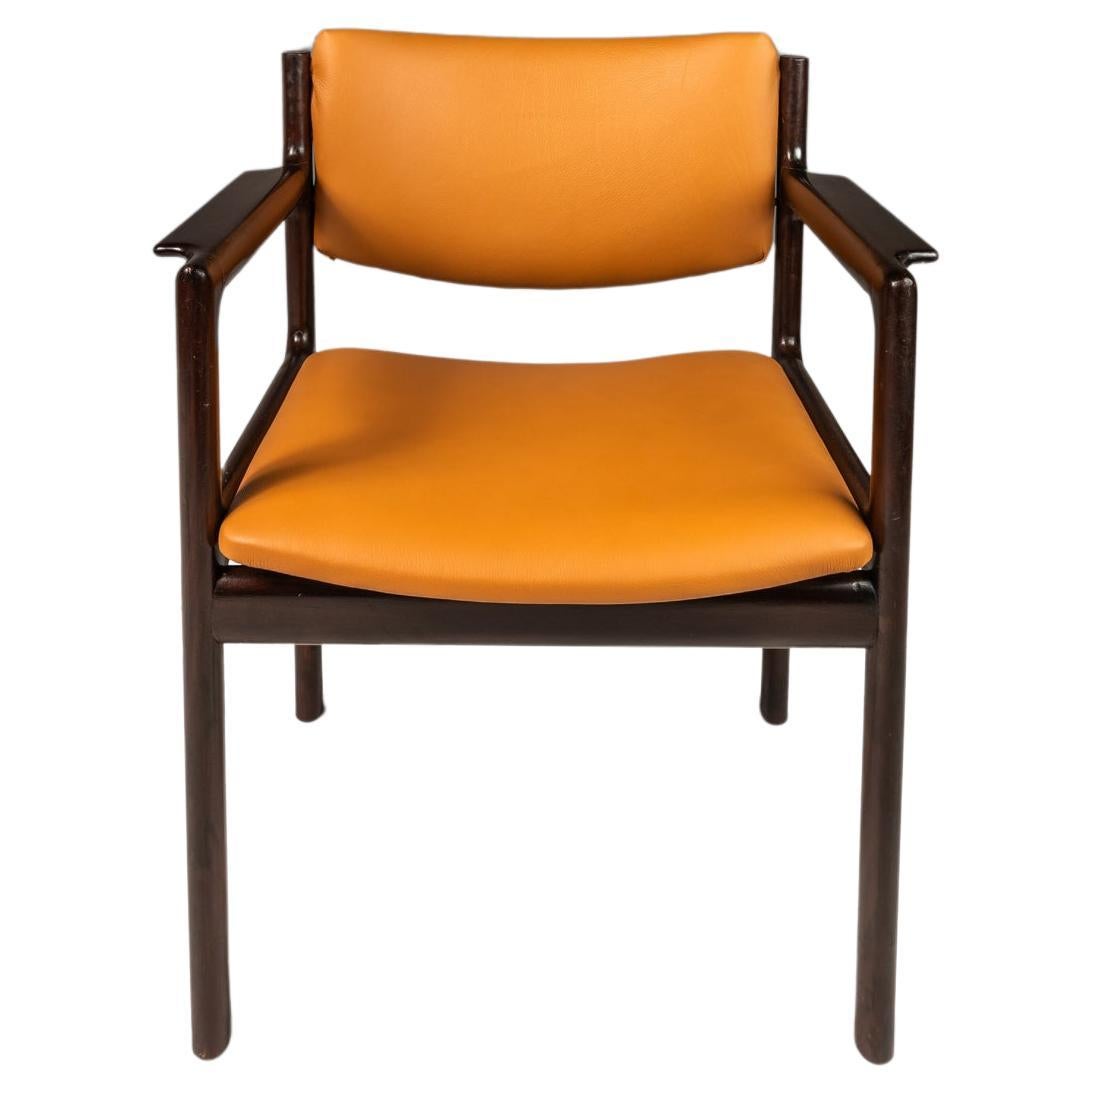 Danish Modern Mahogany & Leather Arm Chair, Danish Overseas Imports, c. 1960's